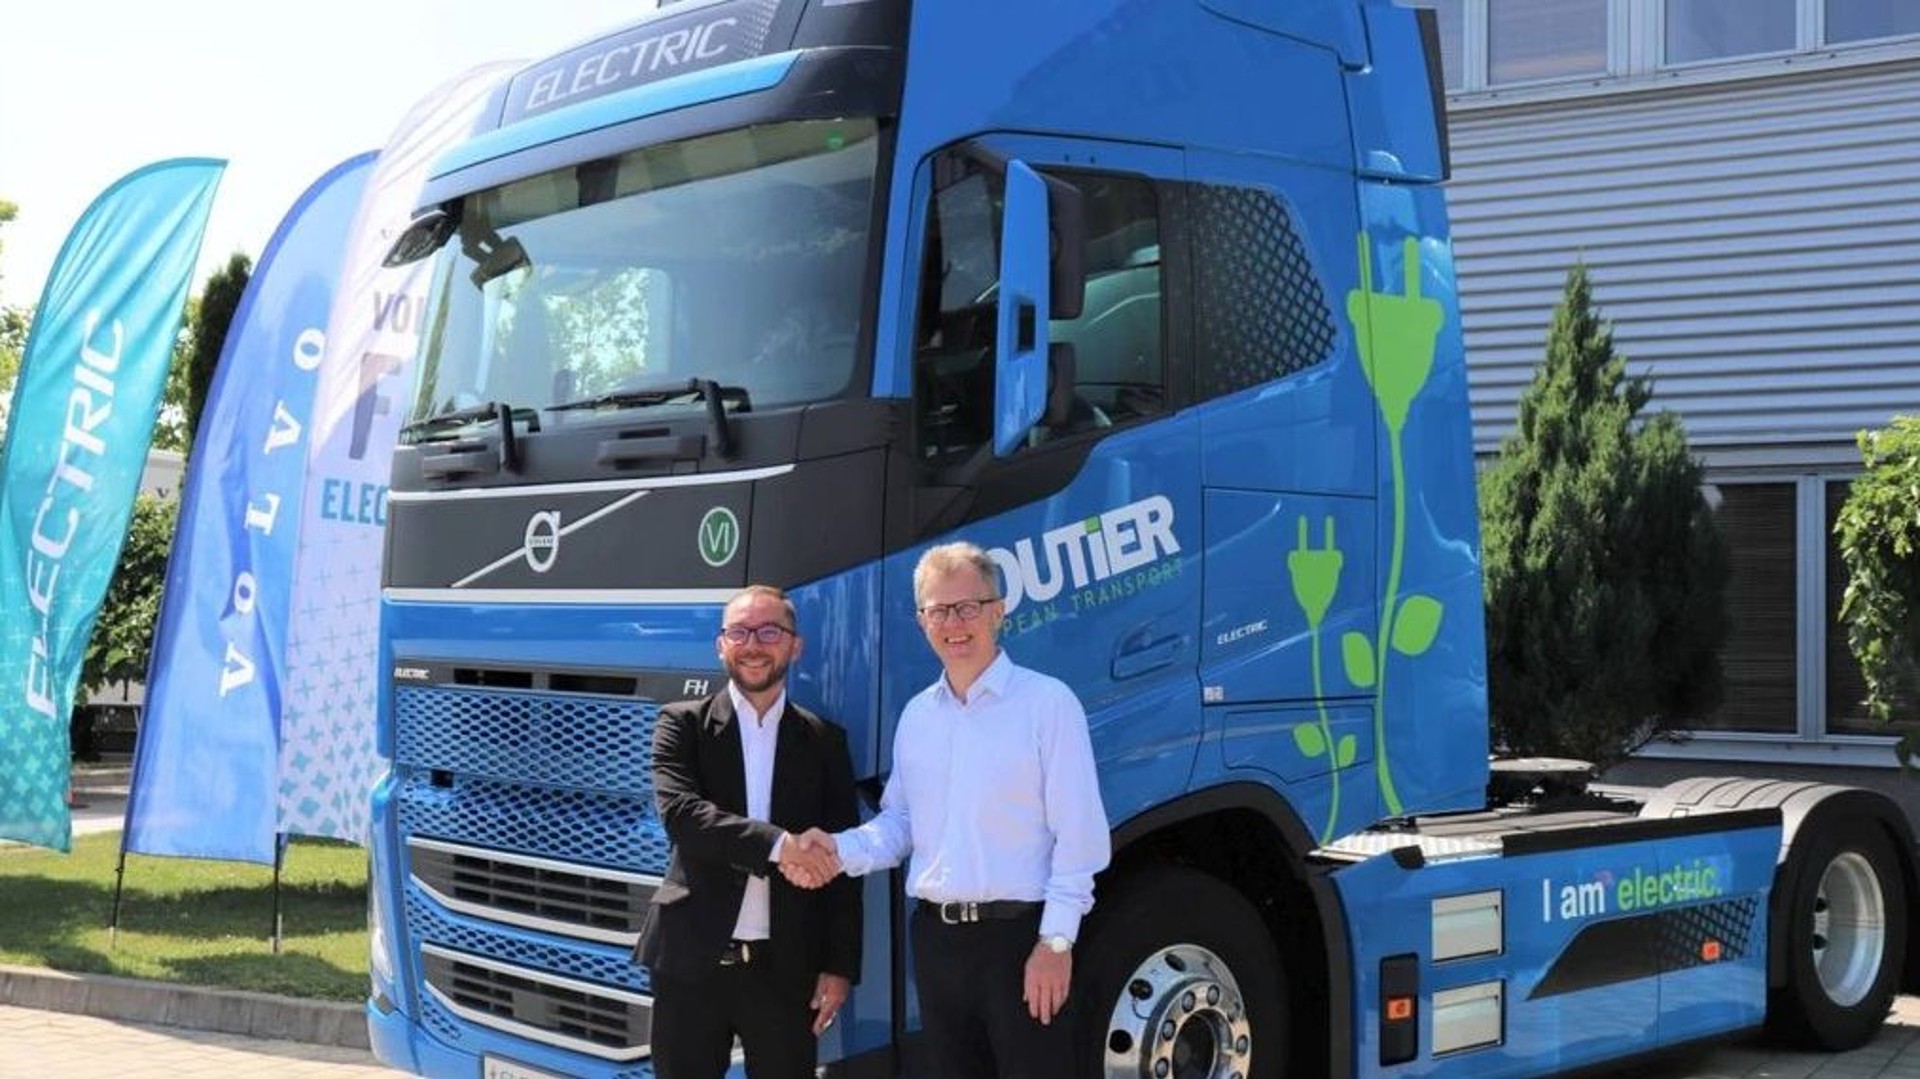 Routier European Transport in fron of an e-truck